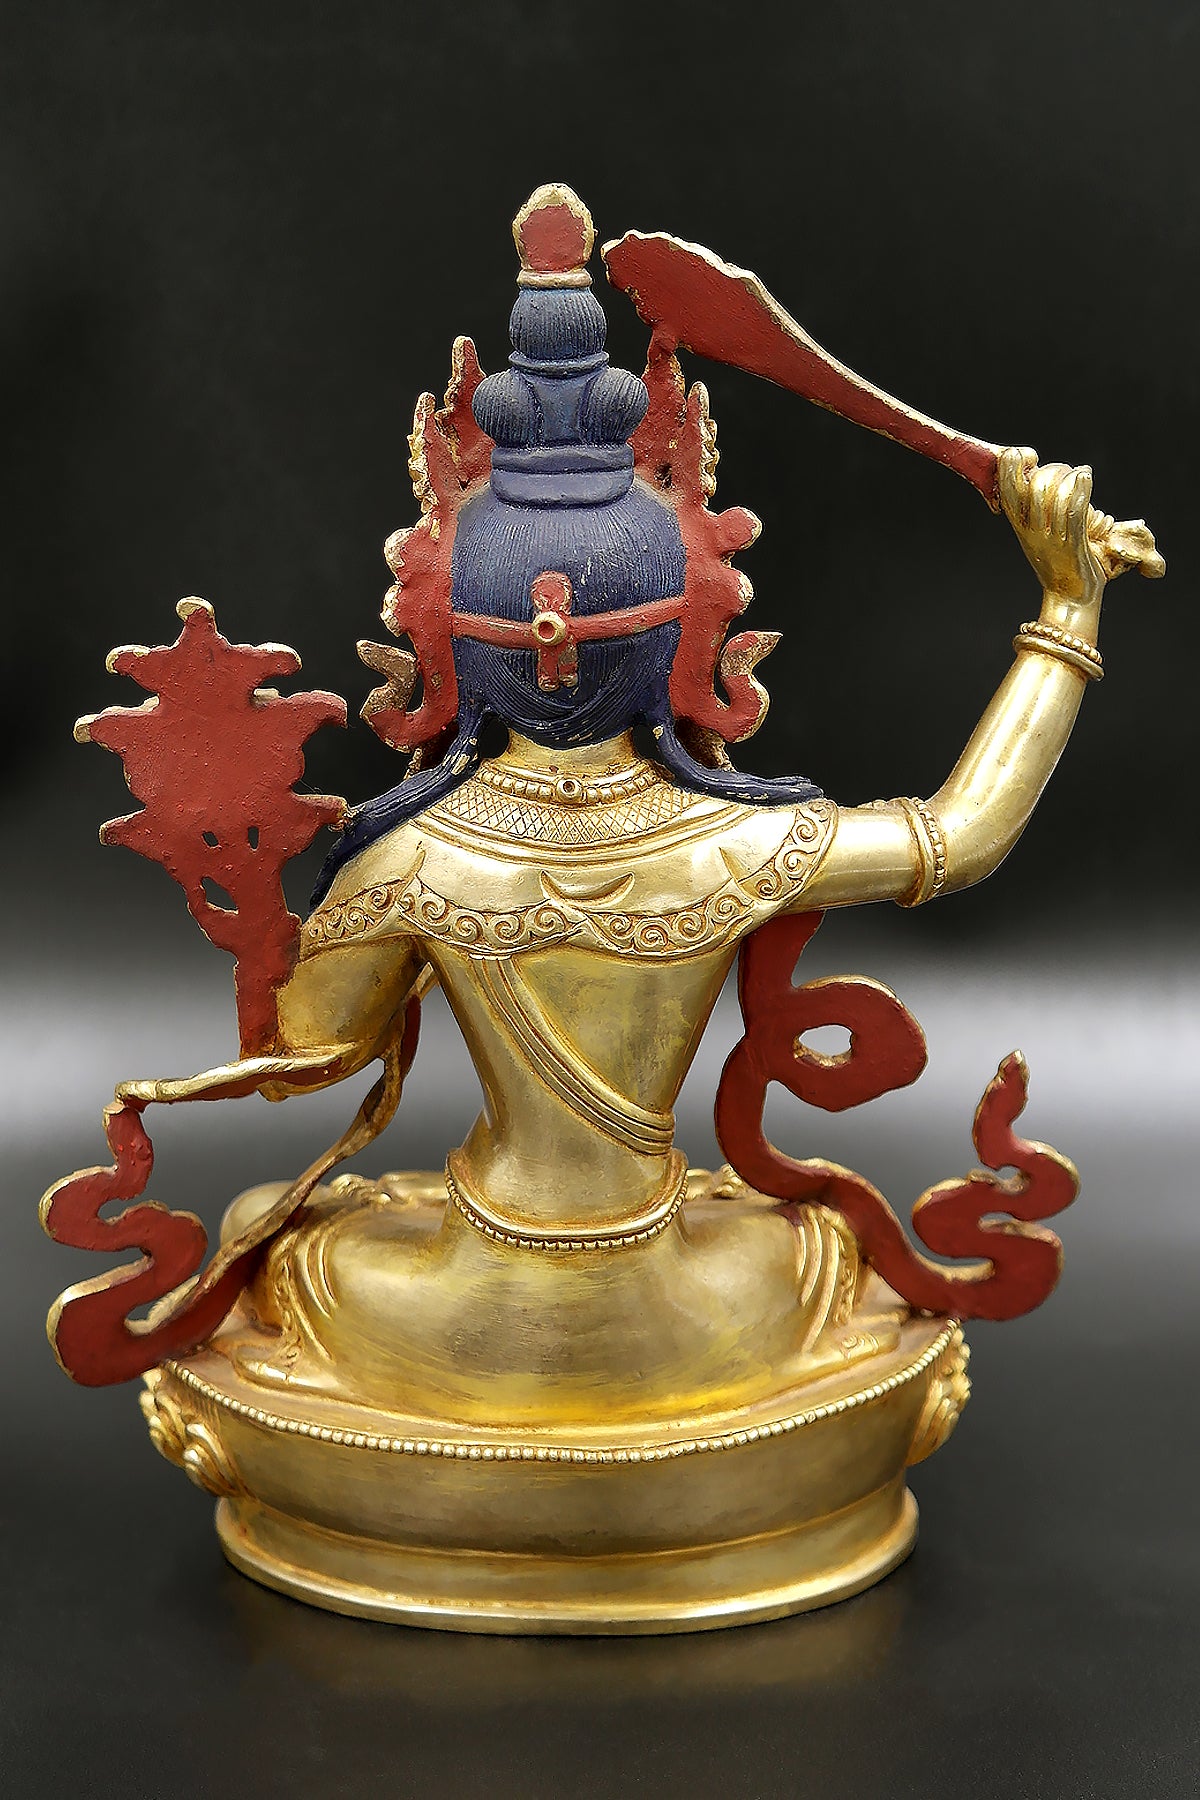 Gold Plated hand made Buddha Manjushree Statue from Nepal 9"